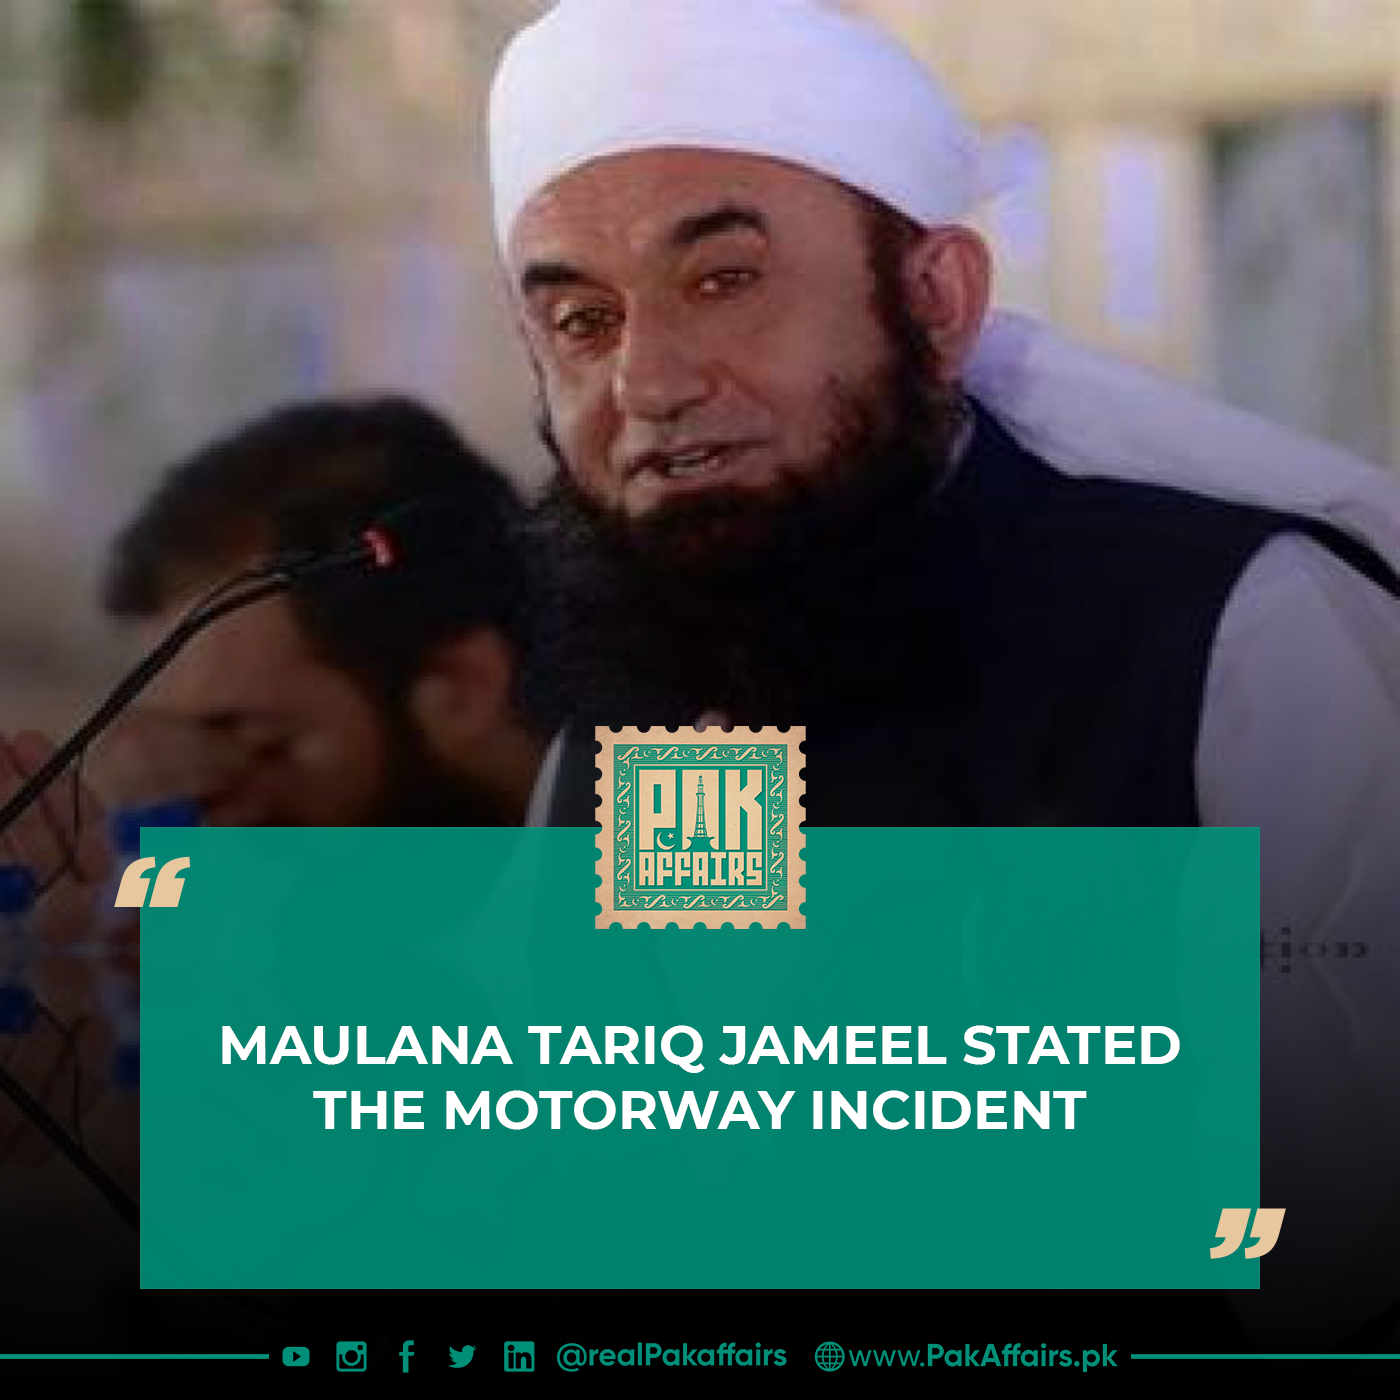 Maulana Tariq Jameel stated the motorway incident